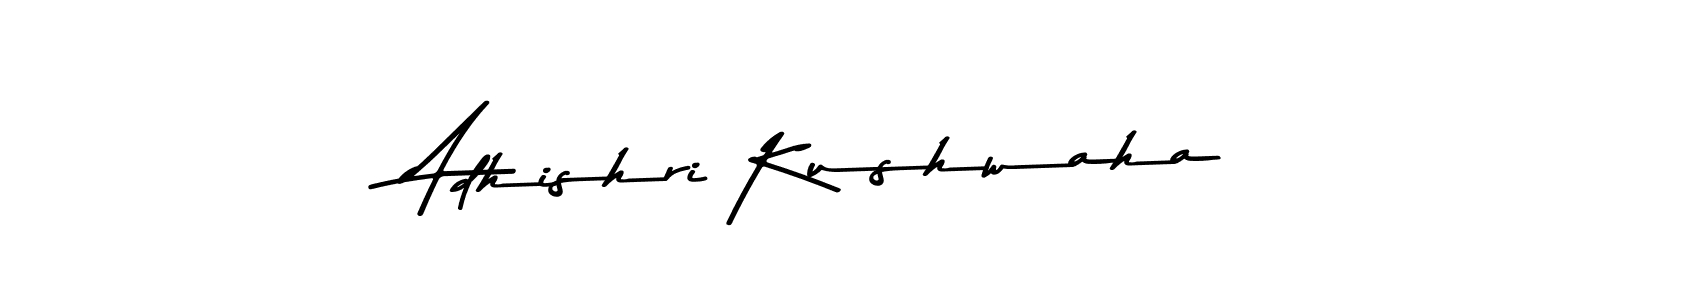 Make a beautiful signature design for name Adhishri Kushwaha. Use this online signature maker to create a handwritten signature for free. Adhishri Kushwaha signature style 9 images and pictures png